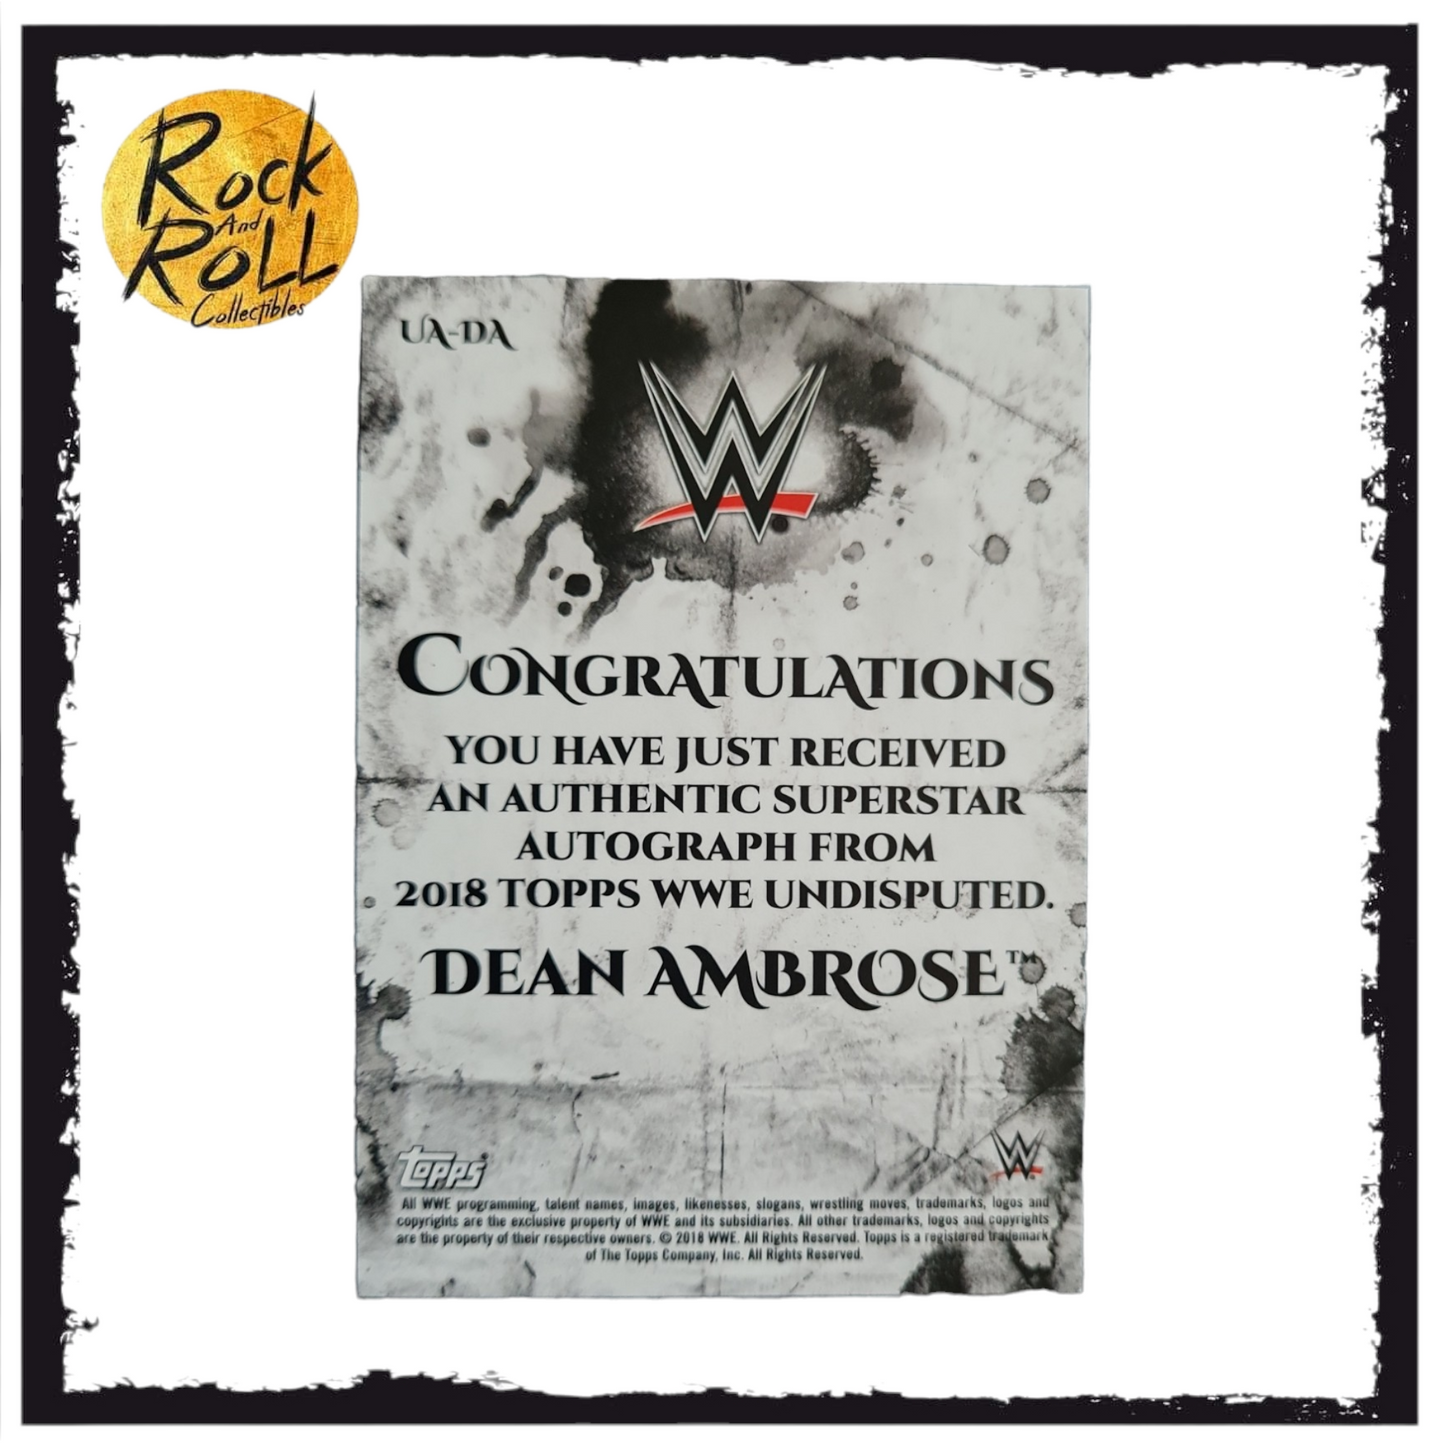 WWE 2018 Topps Undisputed Dean Ambrose (On Card) Autograph Card UA-DA #131/199